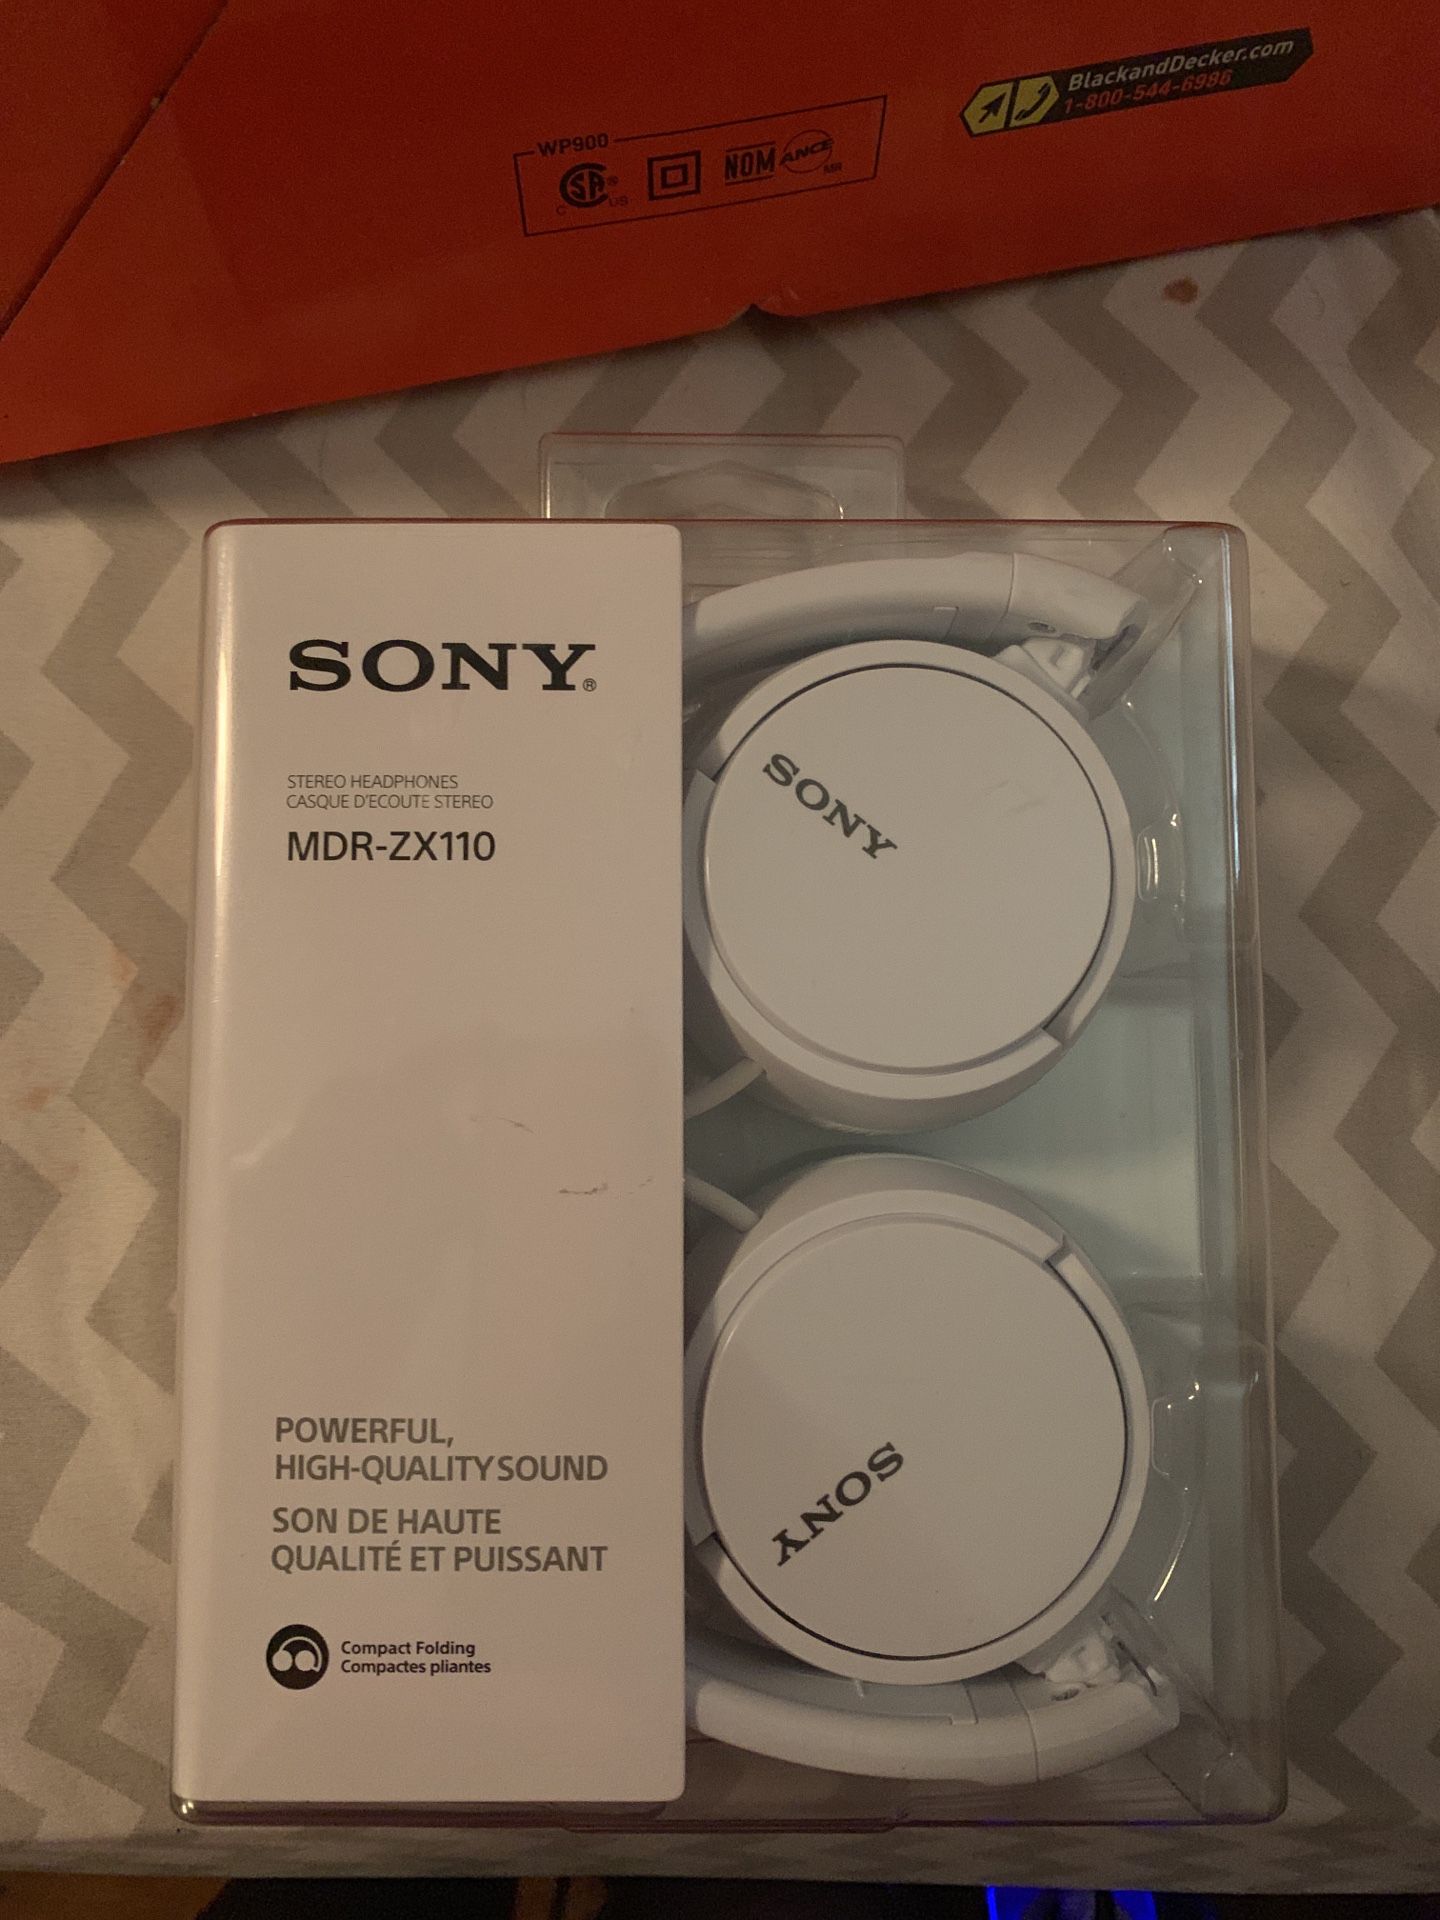 Sony headphones Brand New in box! Great Christmas Gift